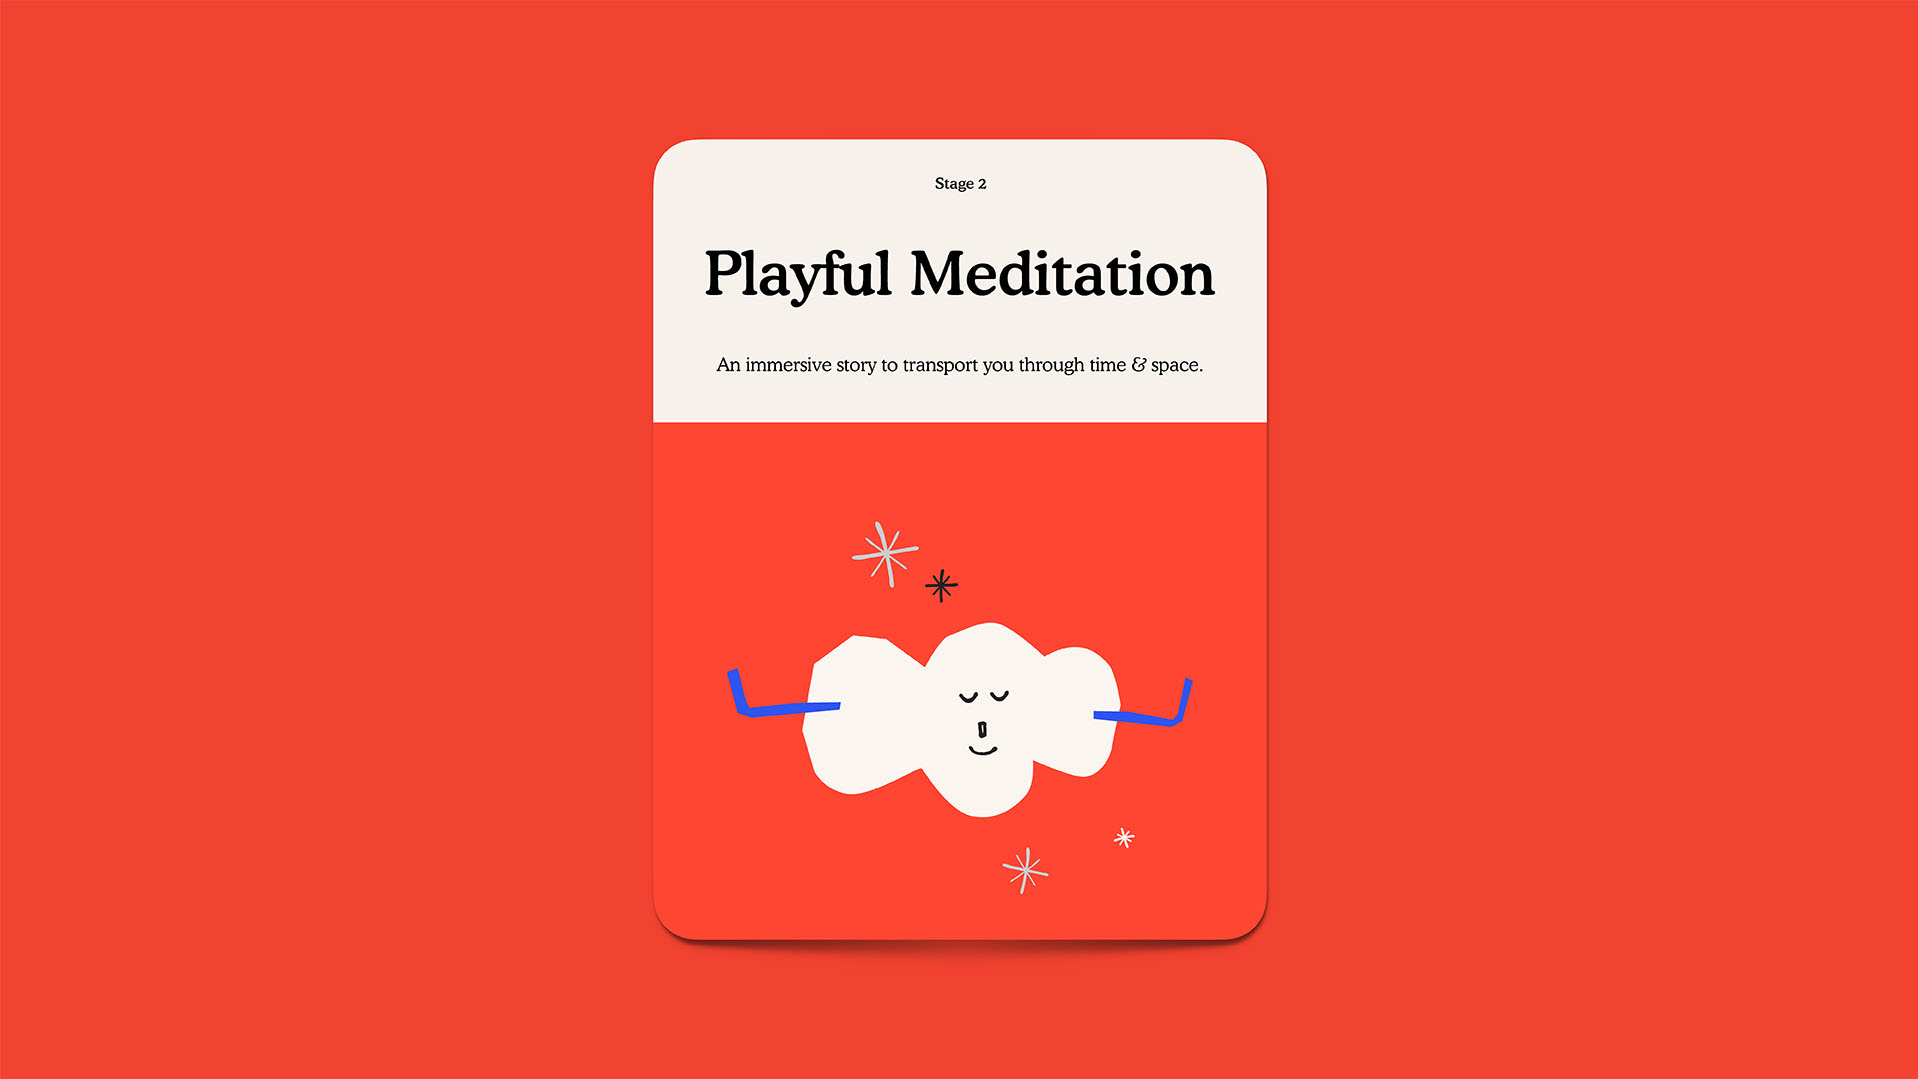 Playful Meditation